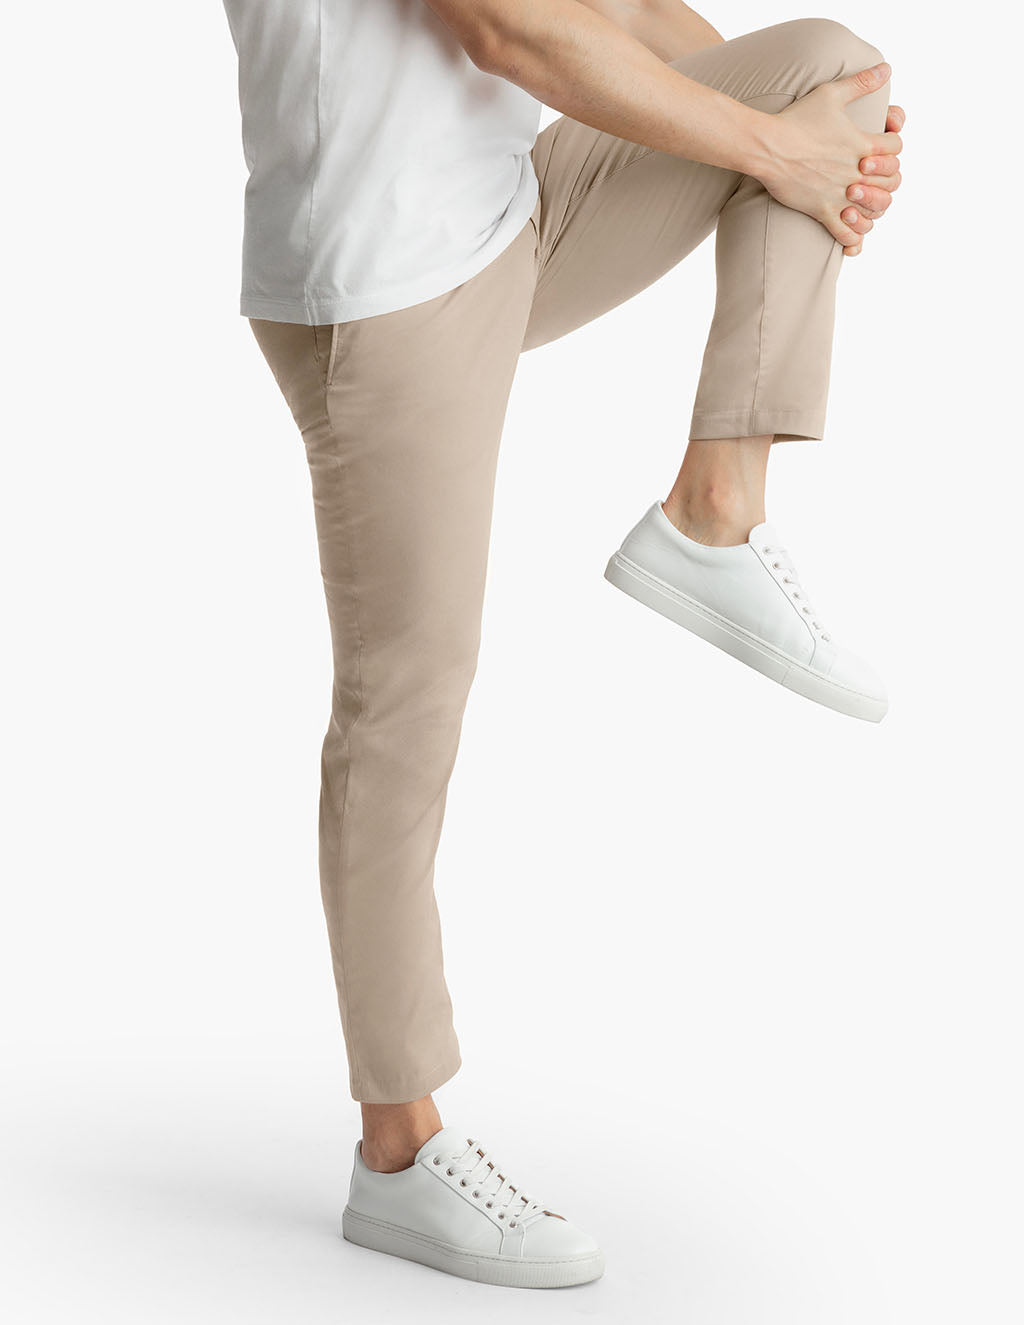 Gap Pants Womens 32x28 White Khakis By Gap Broke-In Straight